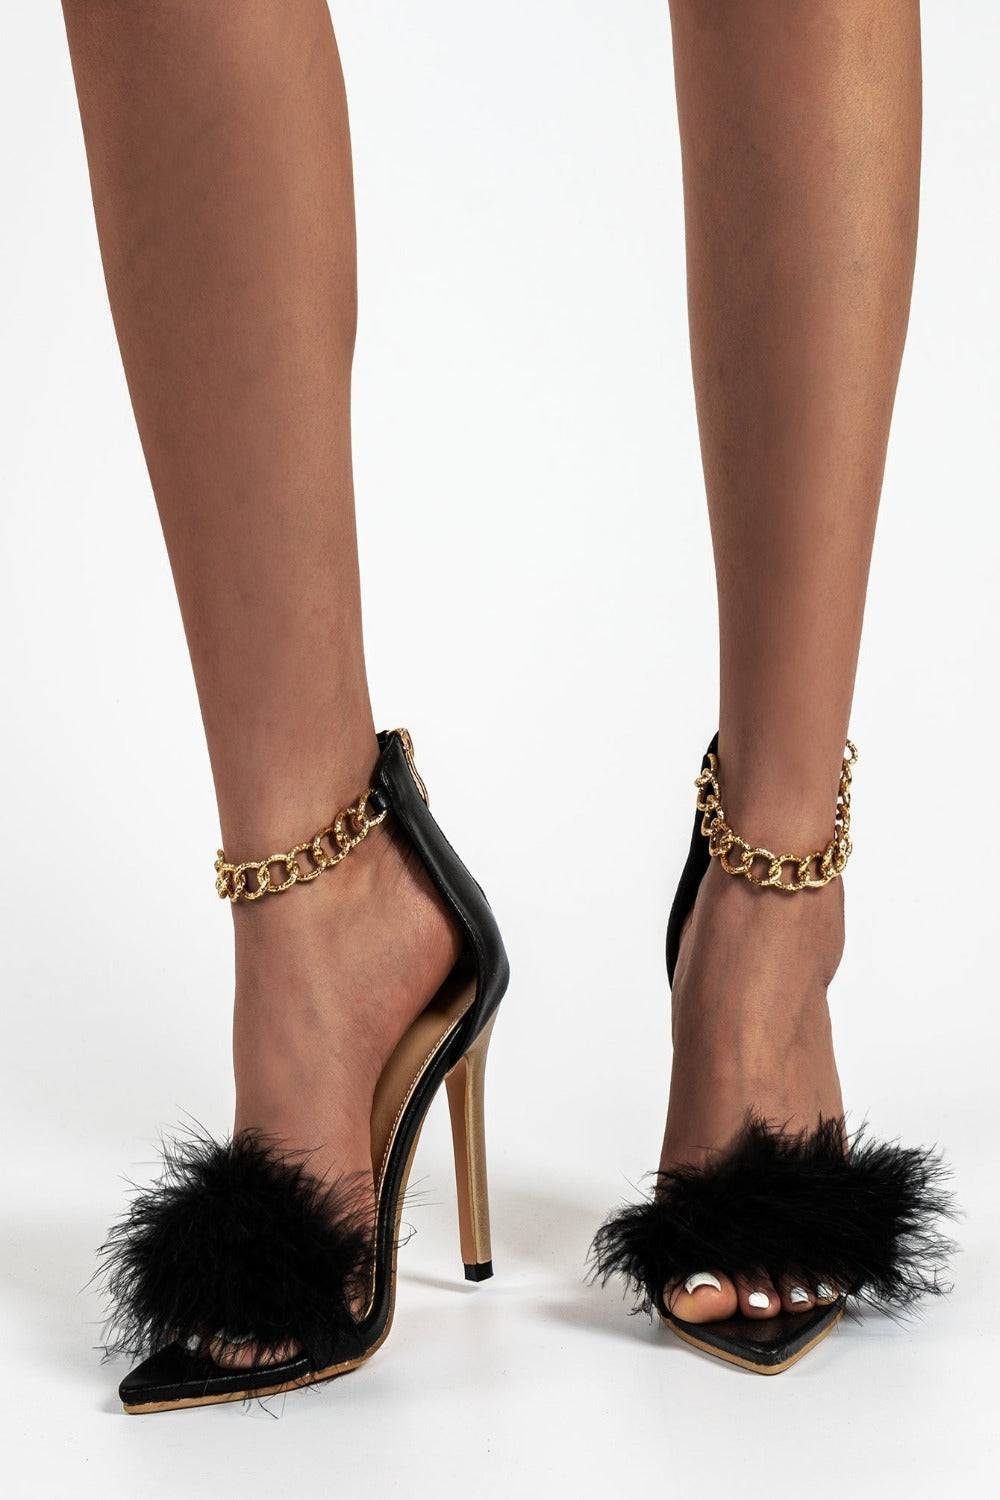 Black Stiletto High Heel Sandals Gold Chain Fluffy Fur Shoes - TGC Boutique - High Heel Sandals